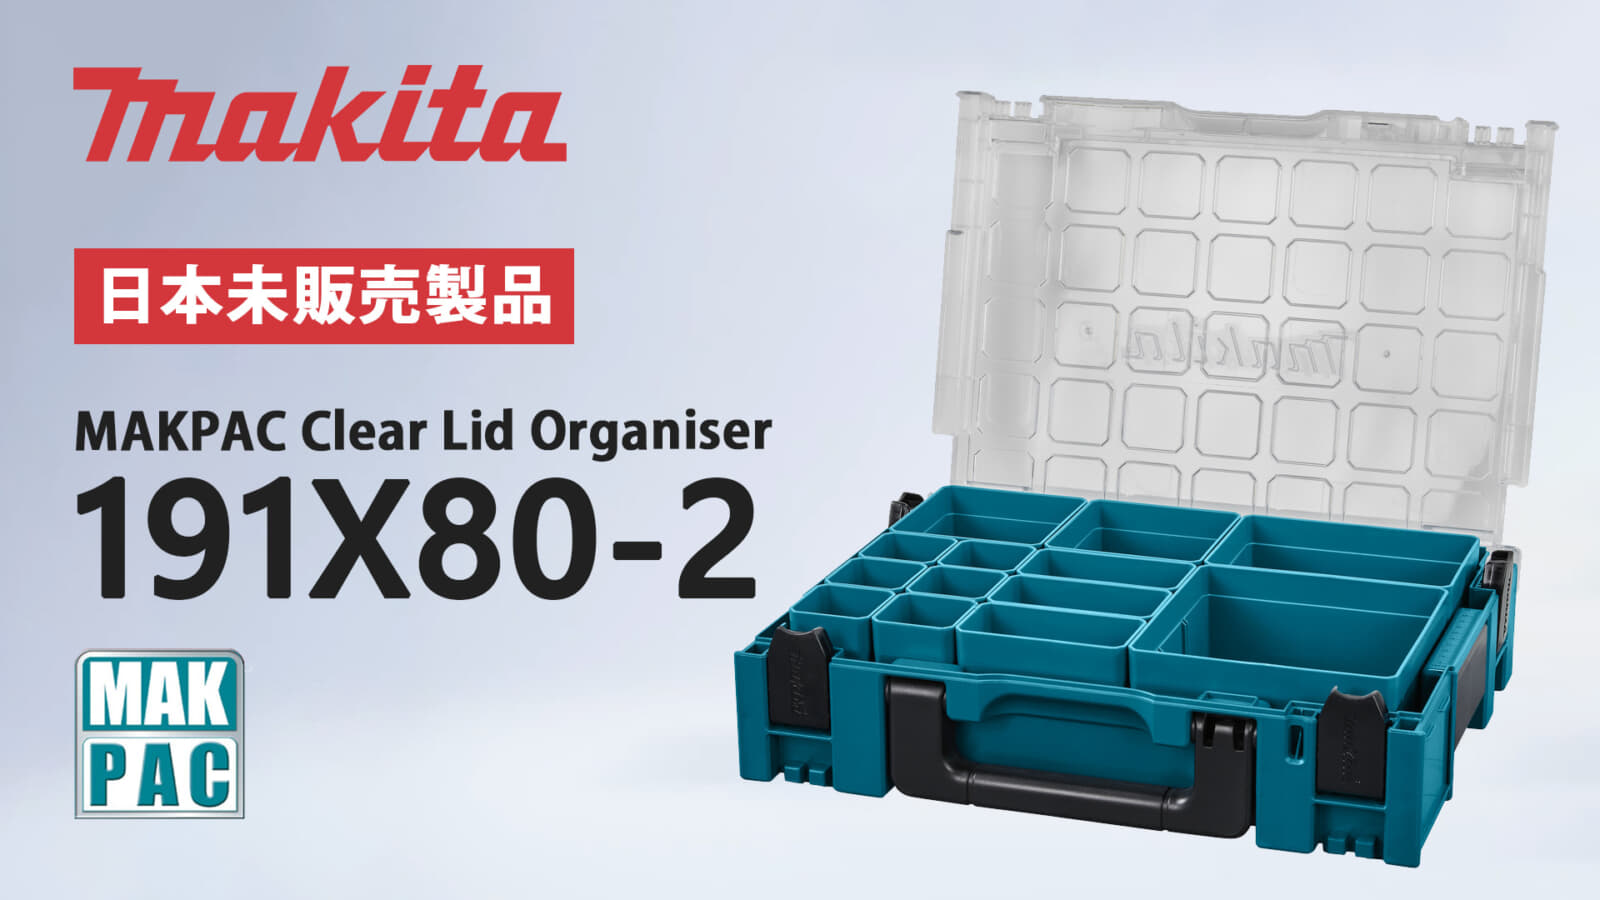 Makita 191X80-2 Clear Lid Organiser を発売、透明蓋の新型マックパック